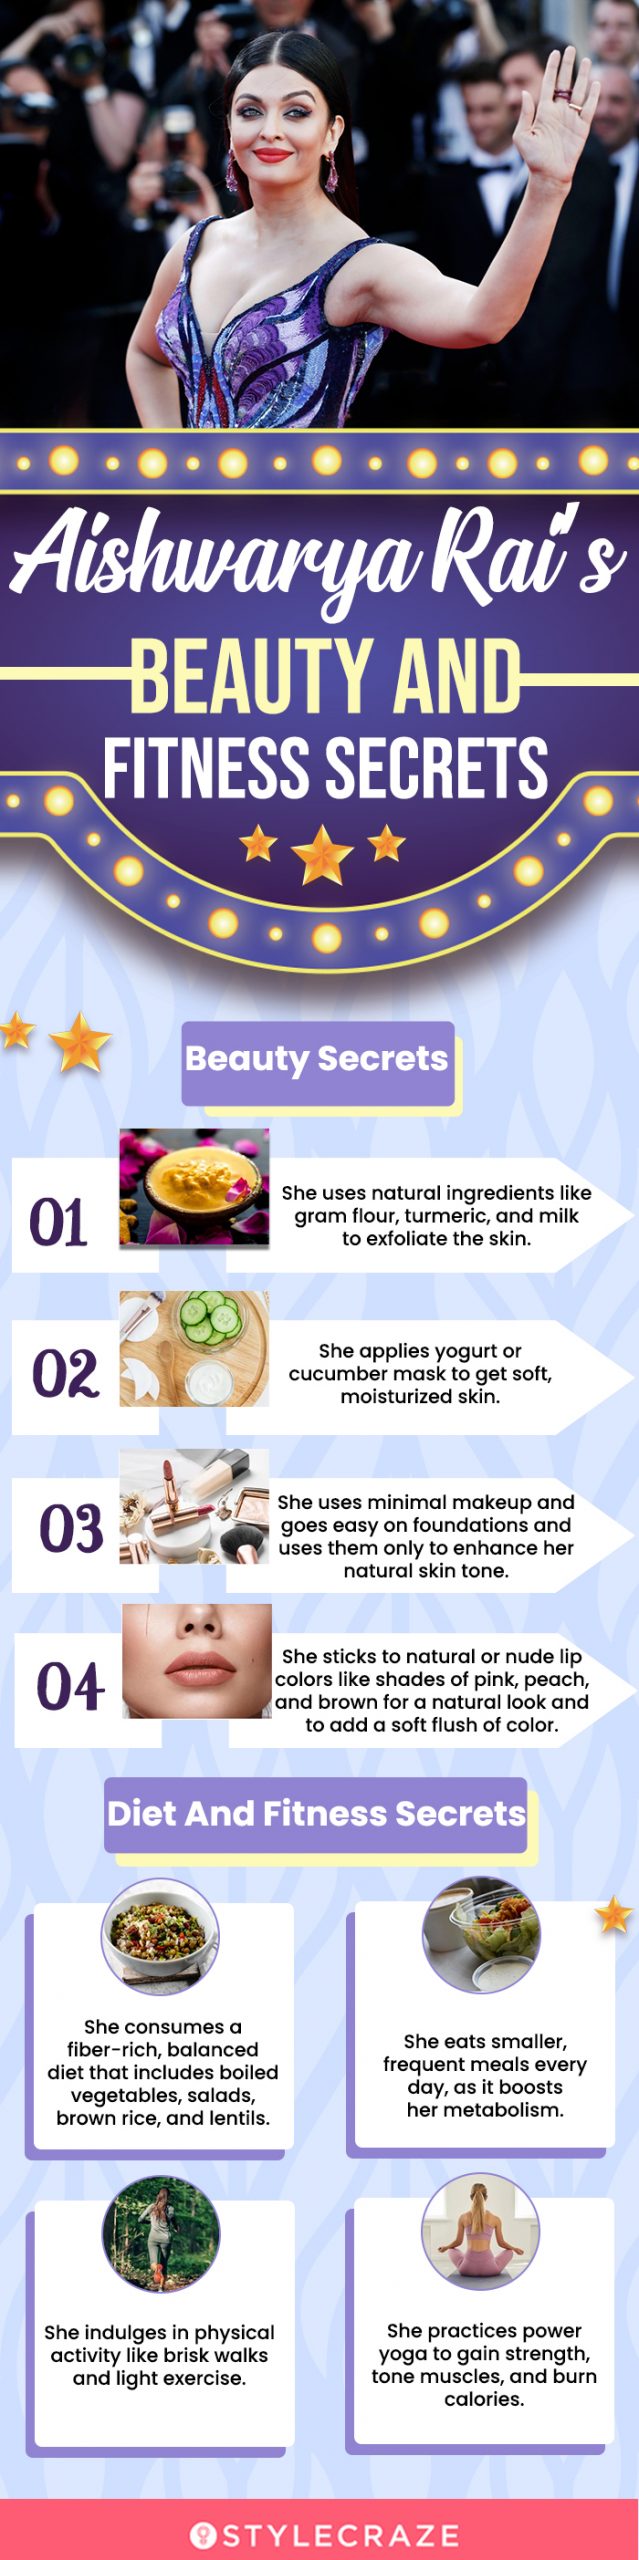 aishwarya rai’s beauty and fitness secrets (infographic)